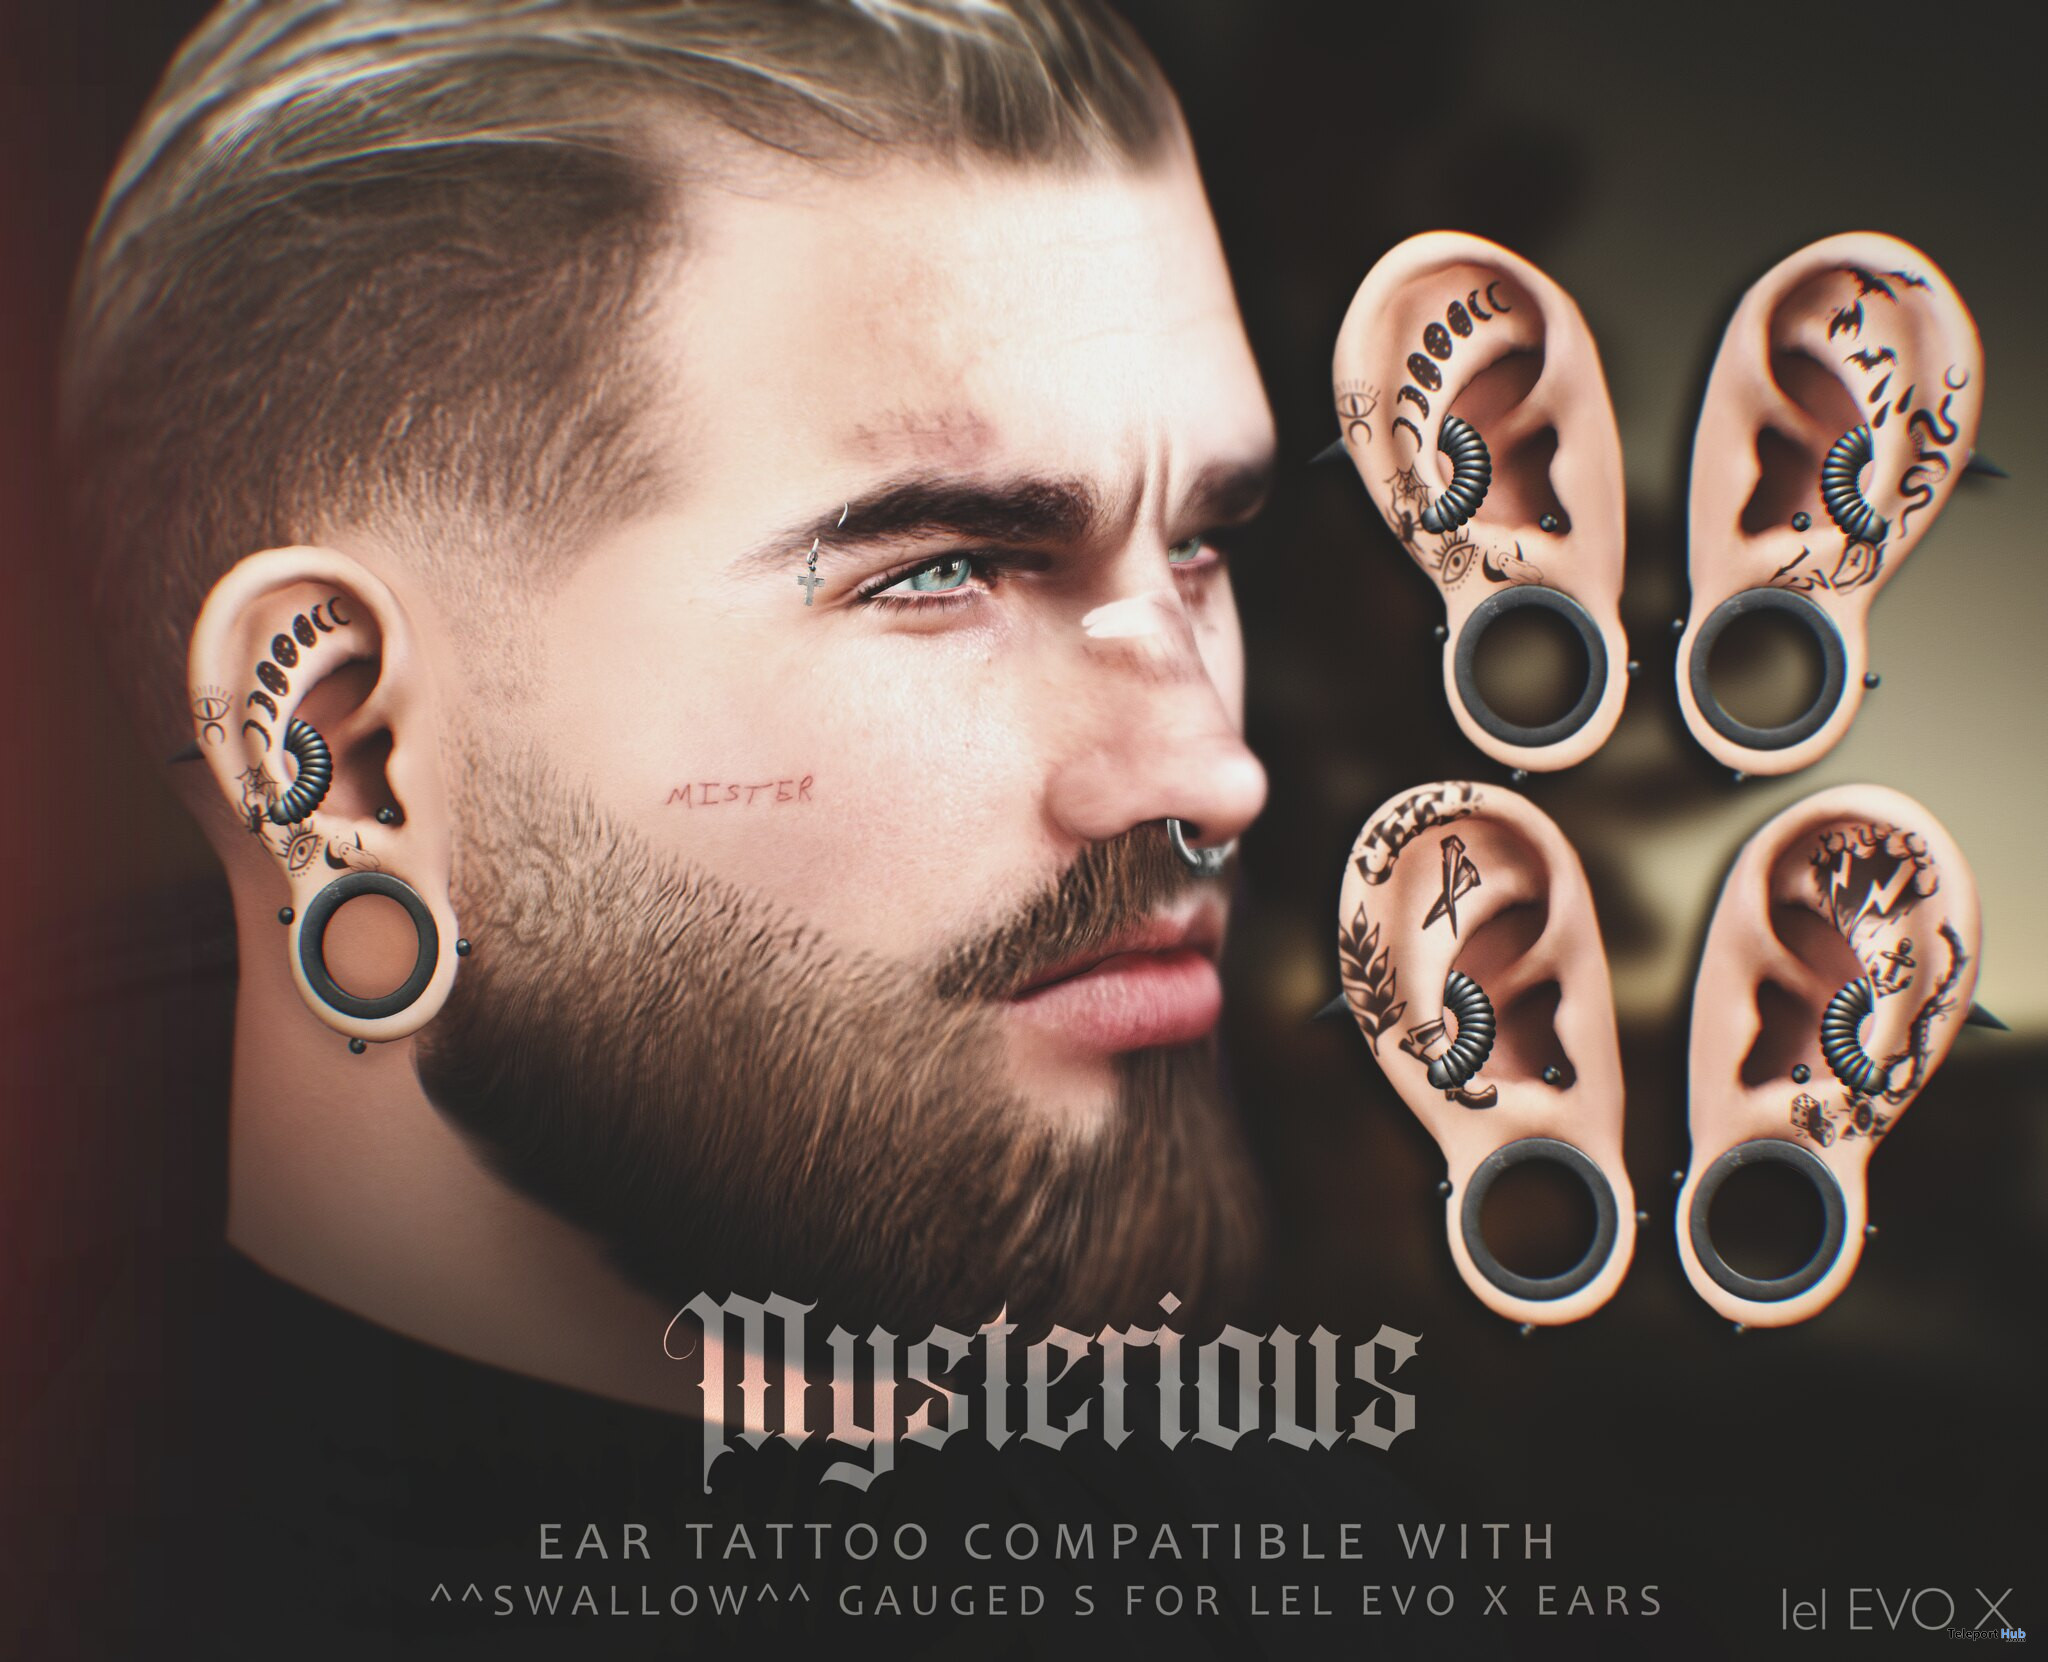 Mysterious Ear Tattoo September 2022 Group Gift by MISTER RAZZOR - Teleport Hub - teleporthub.com